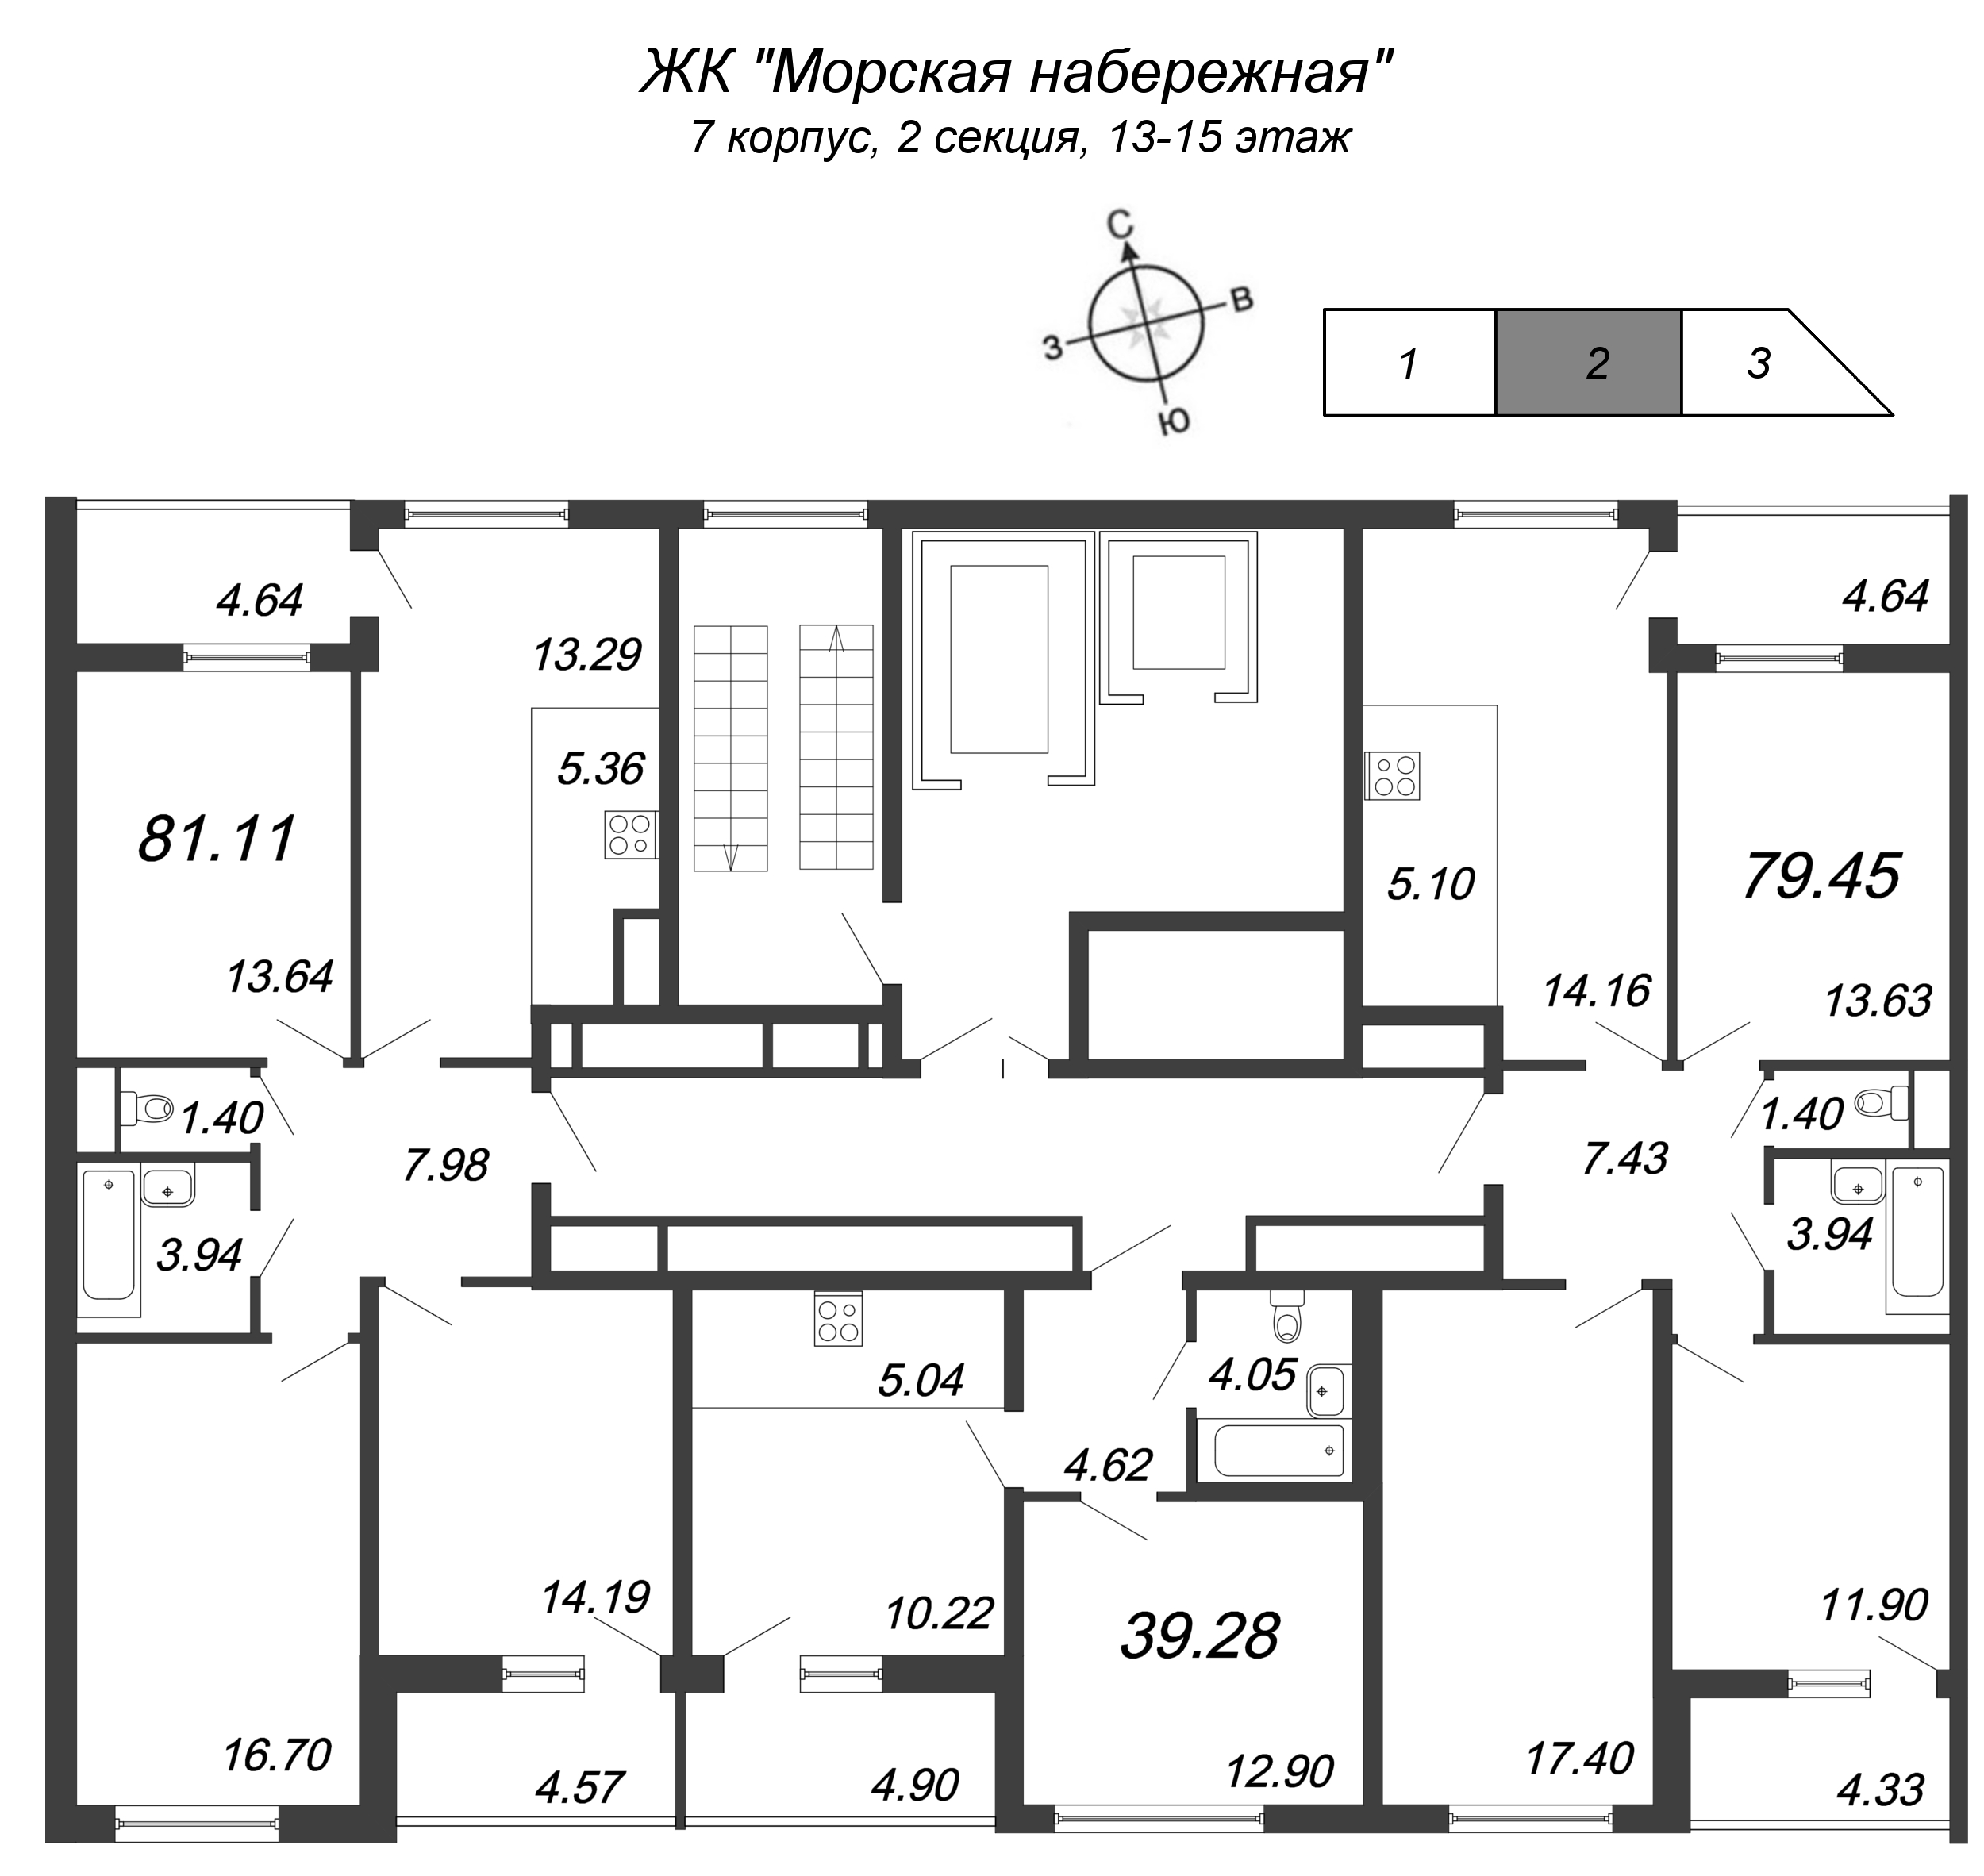 4-комнатная (Евро) квартира, 80 м² - планировка этажа